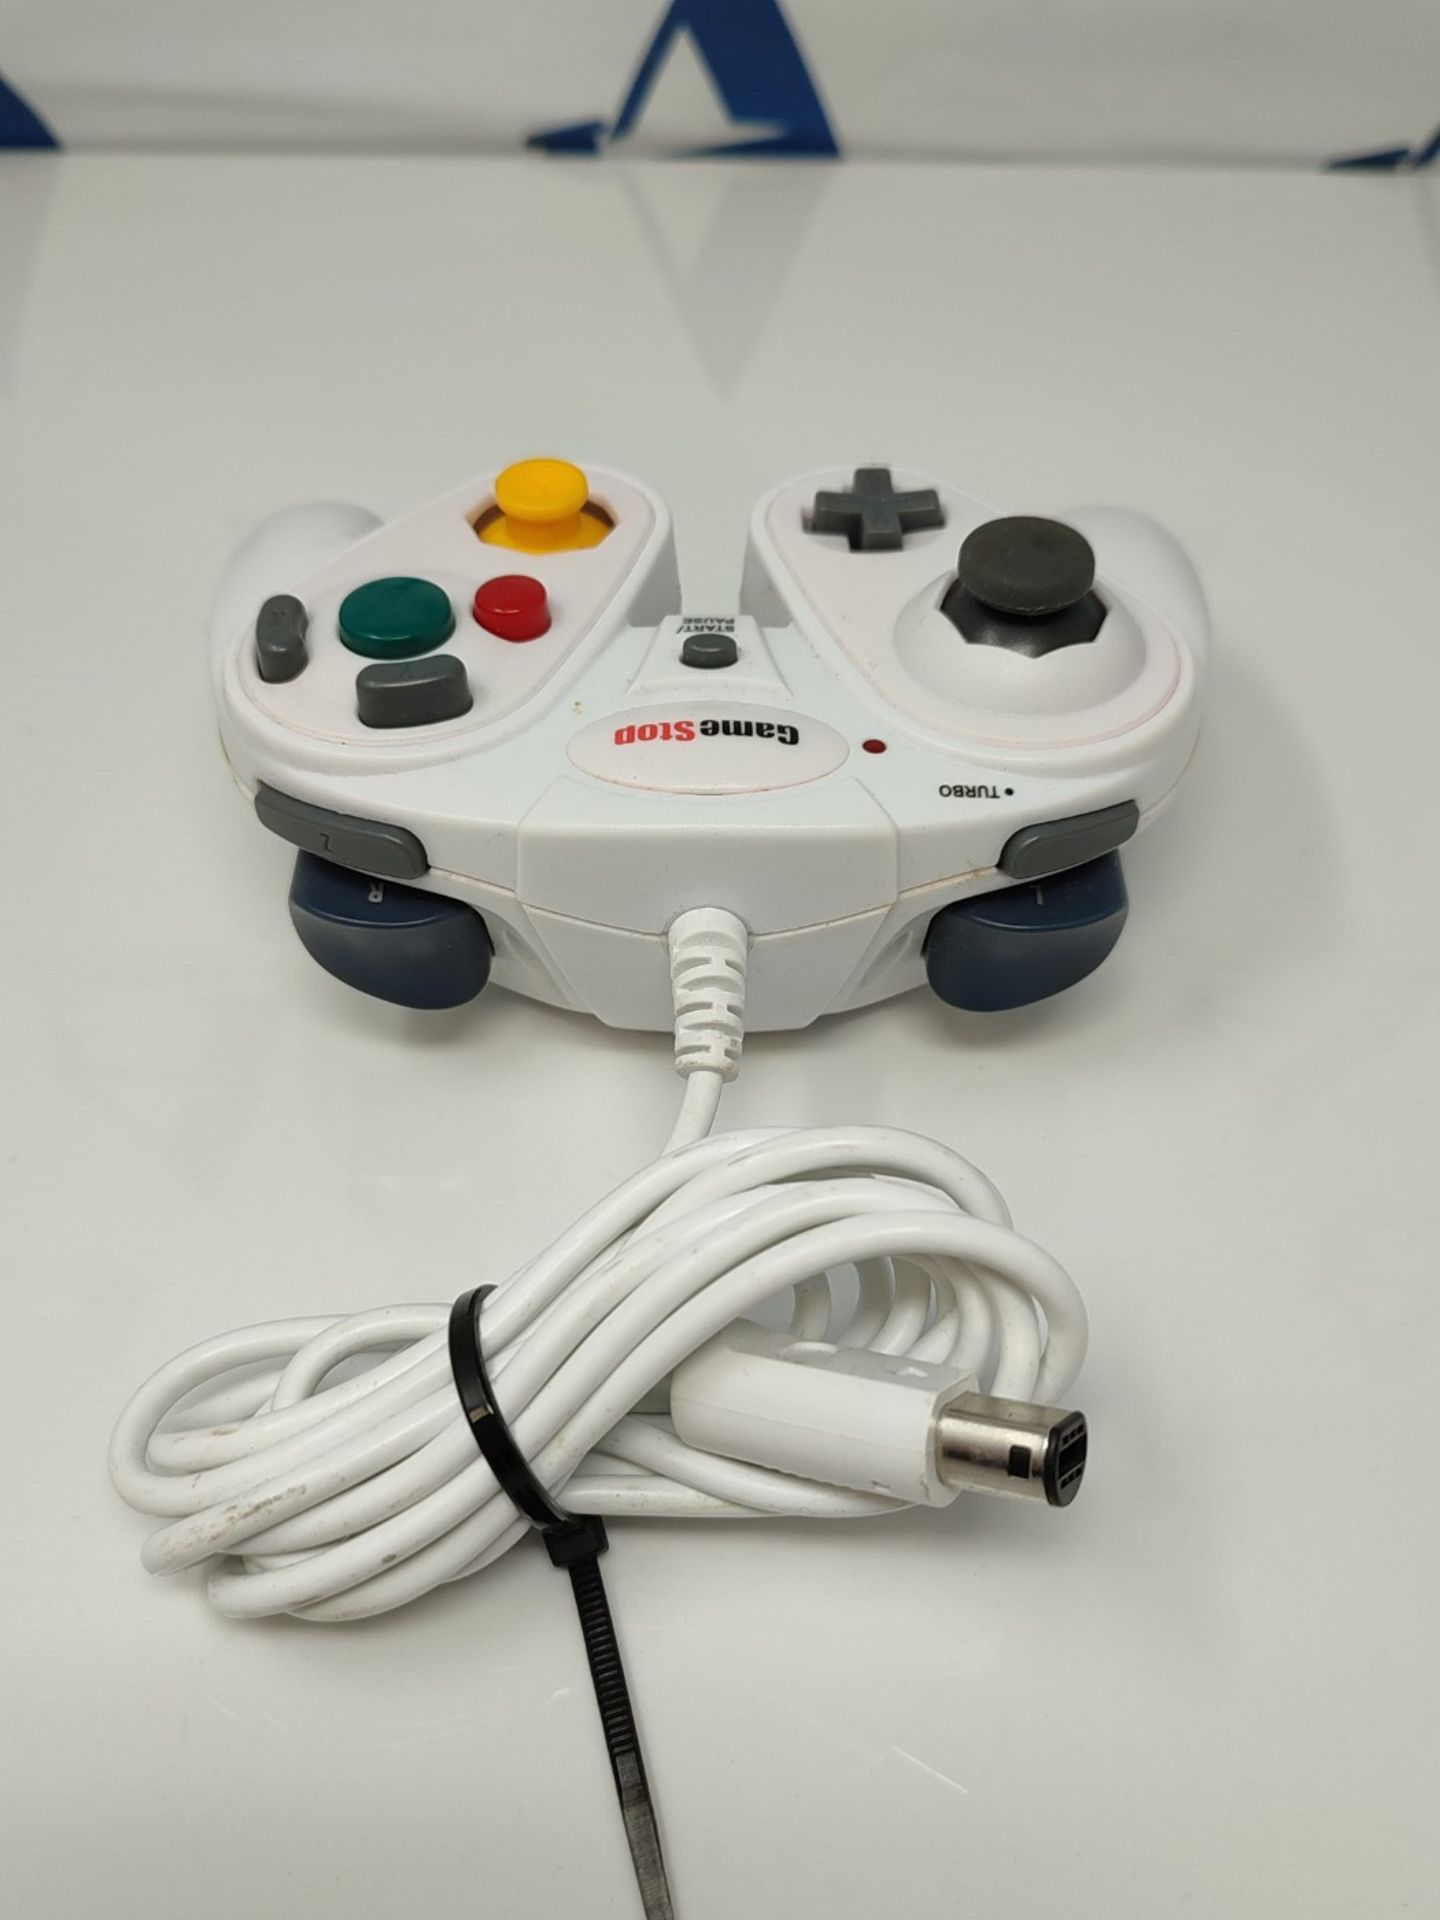 Nintendo Game Stop controller - Image 2 of 2